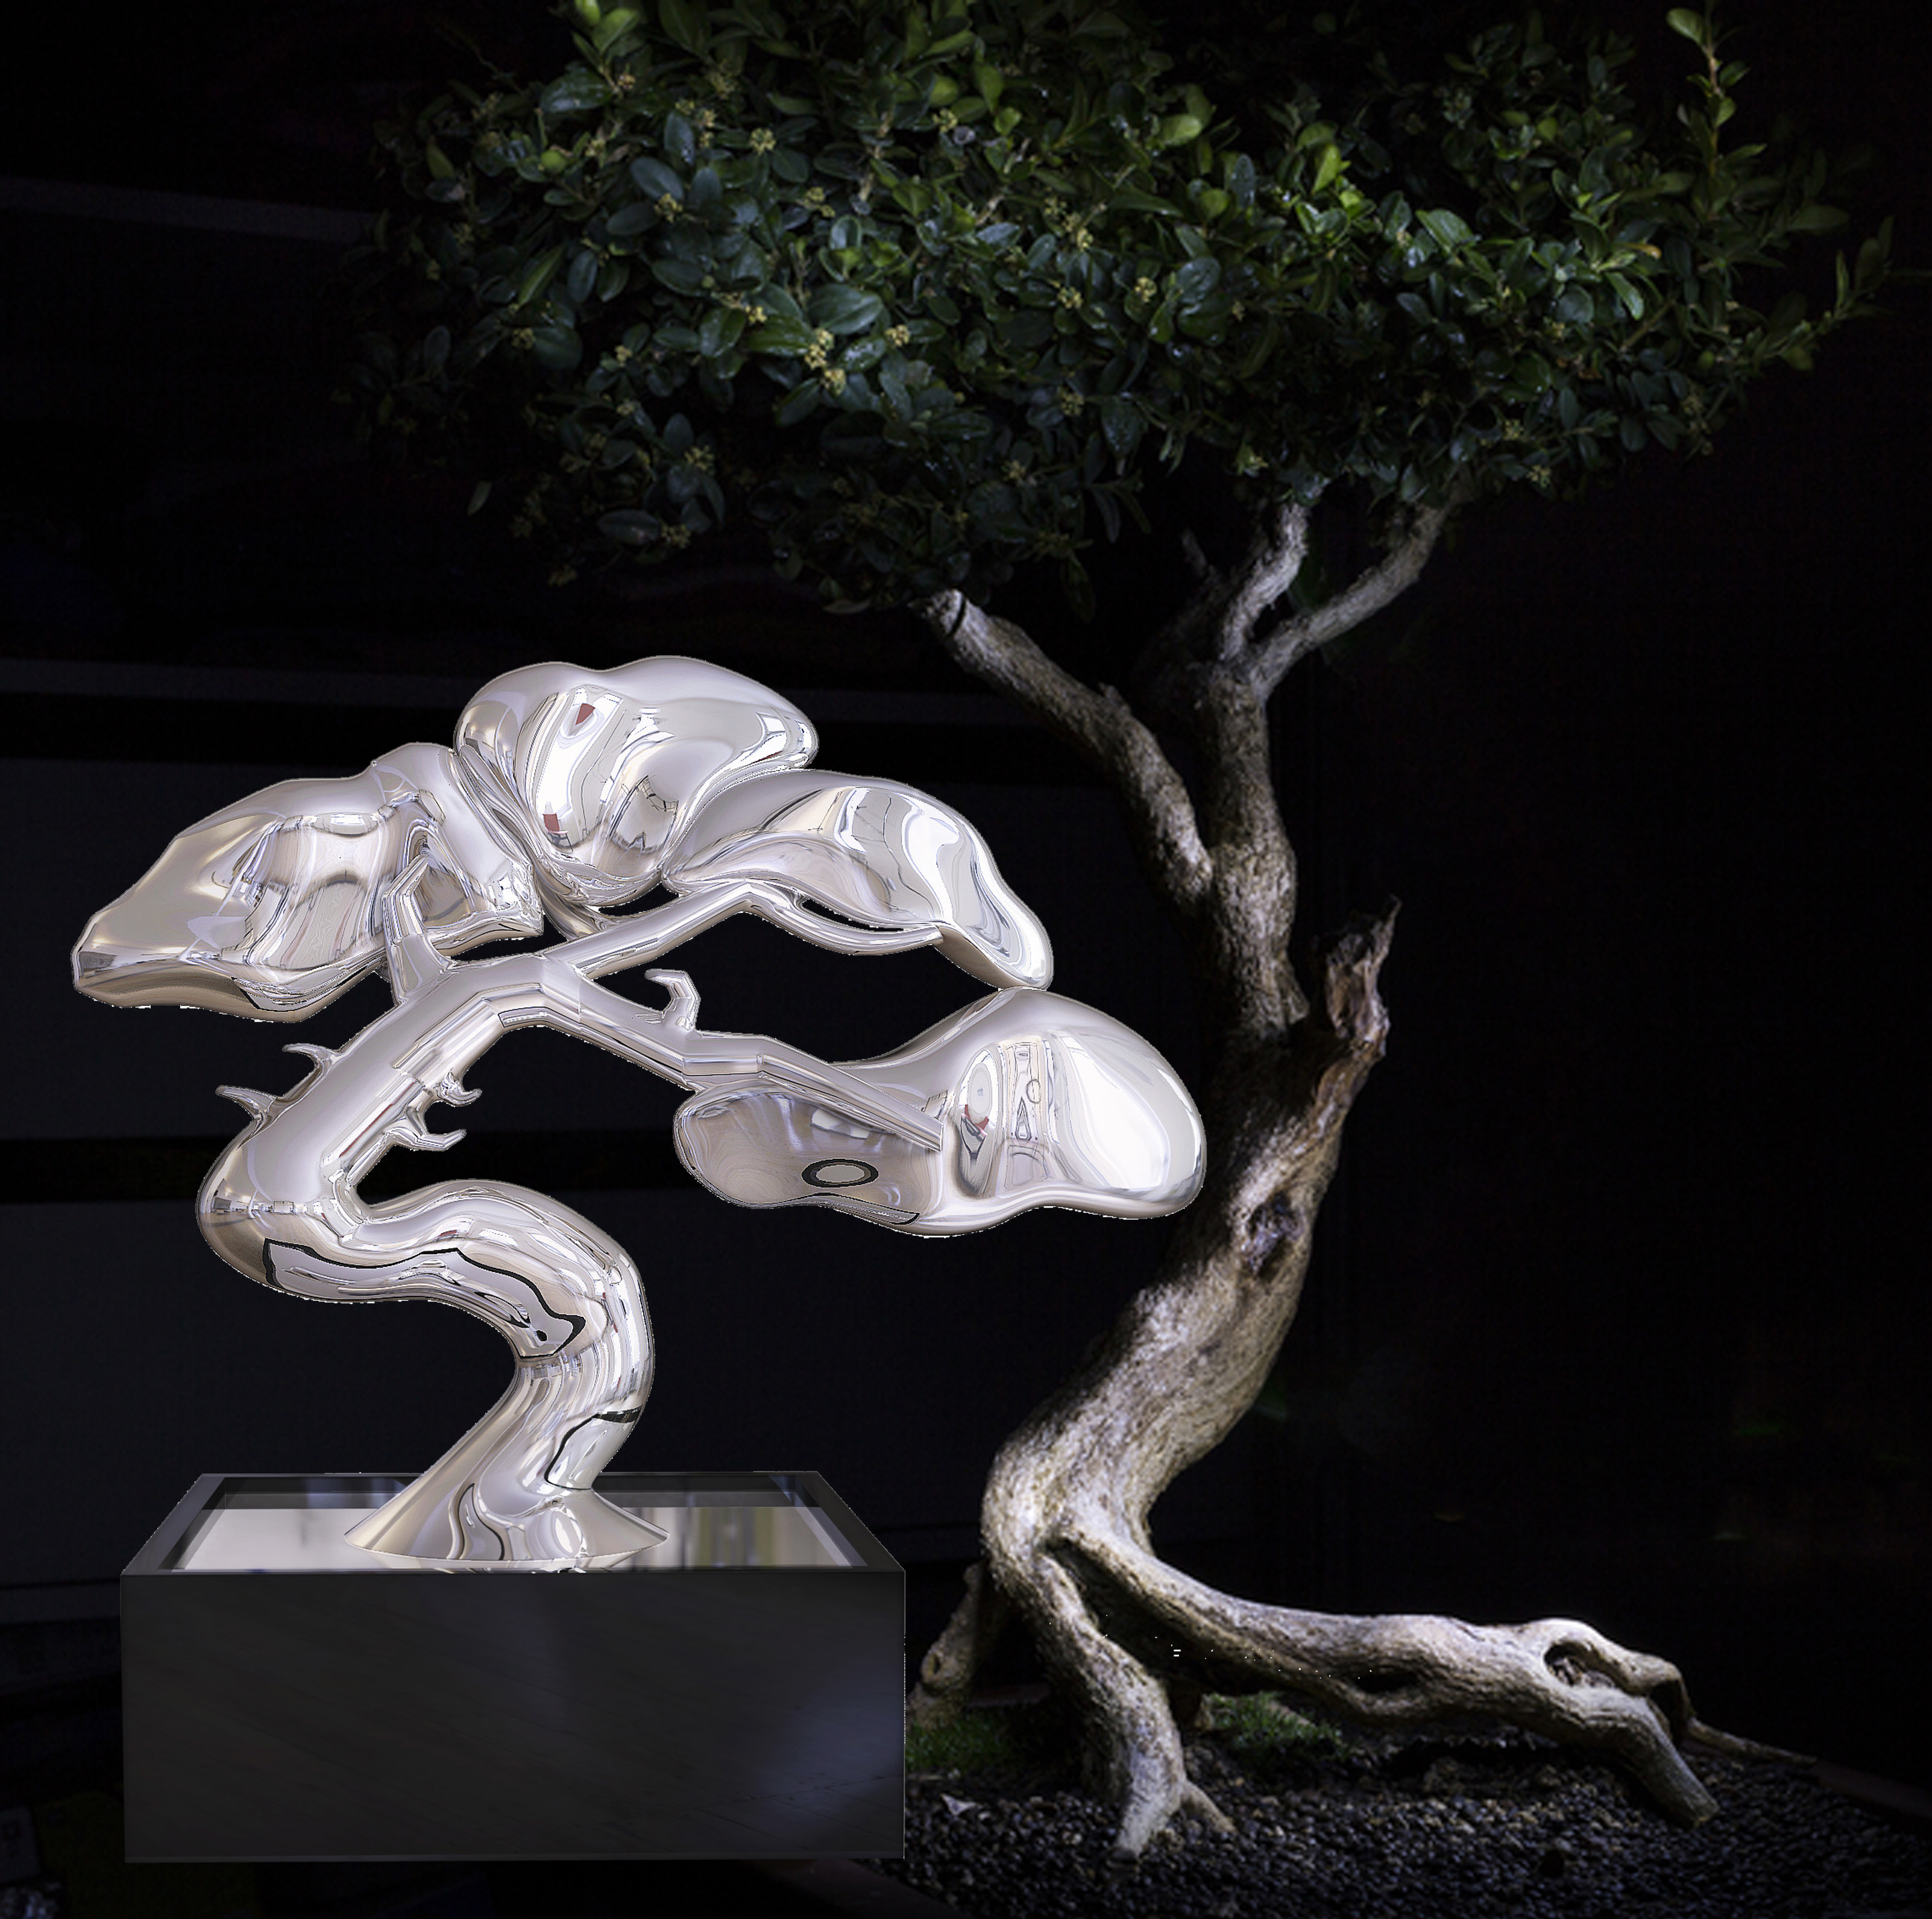 Metal bonsai tree superimposed over a dark image of a real bonsai tree.